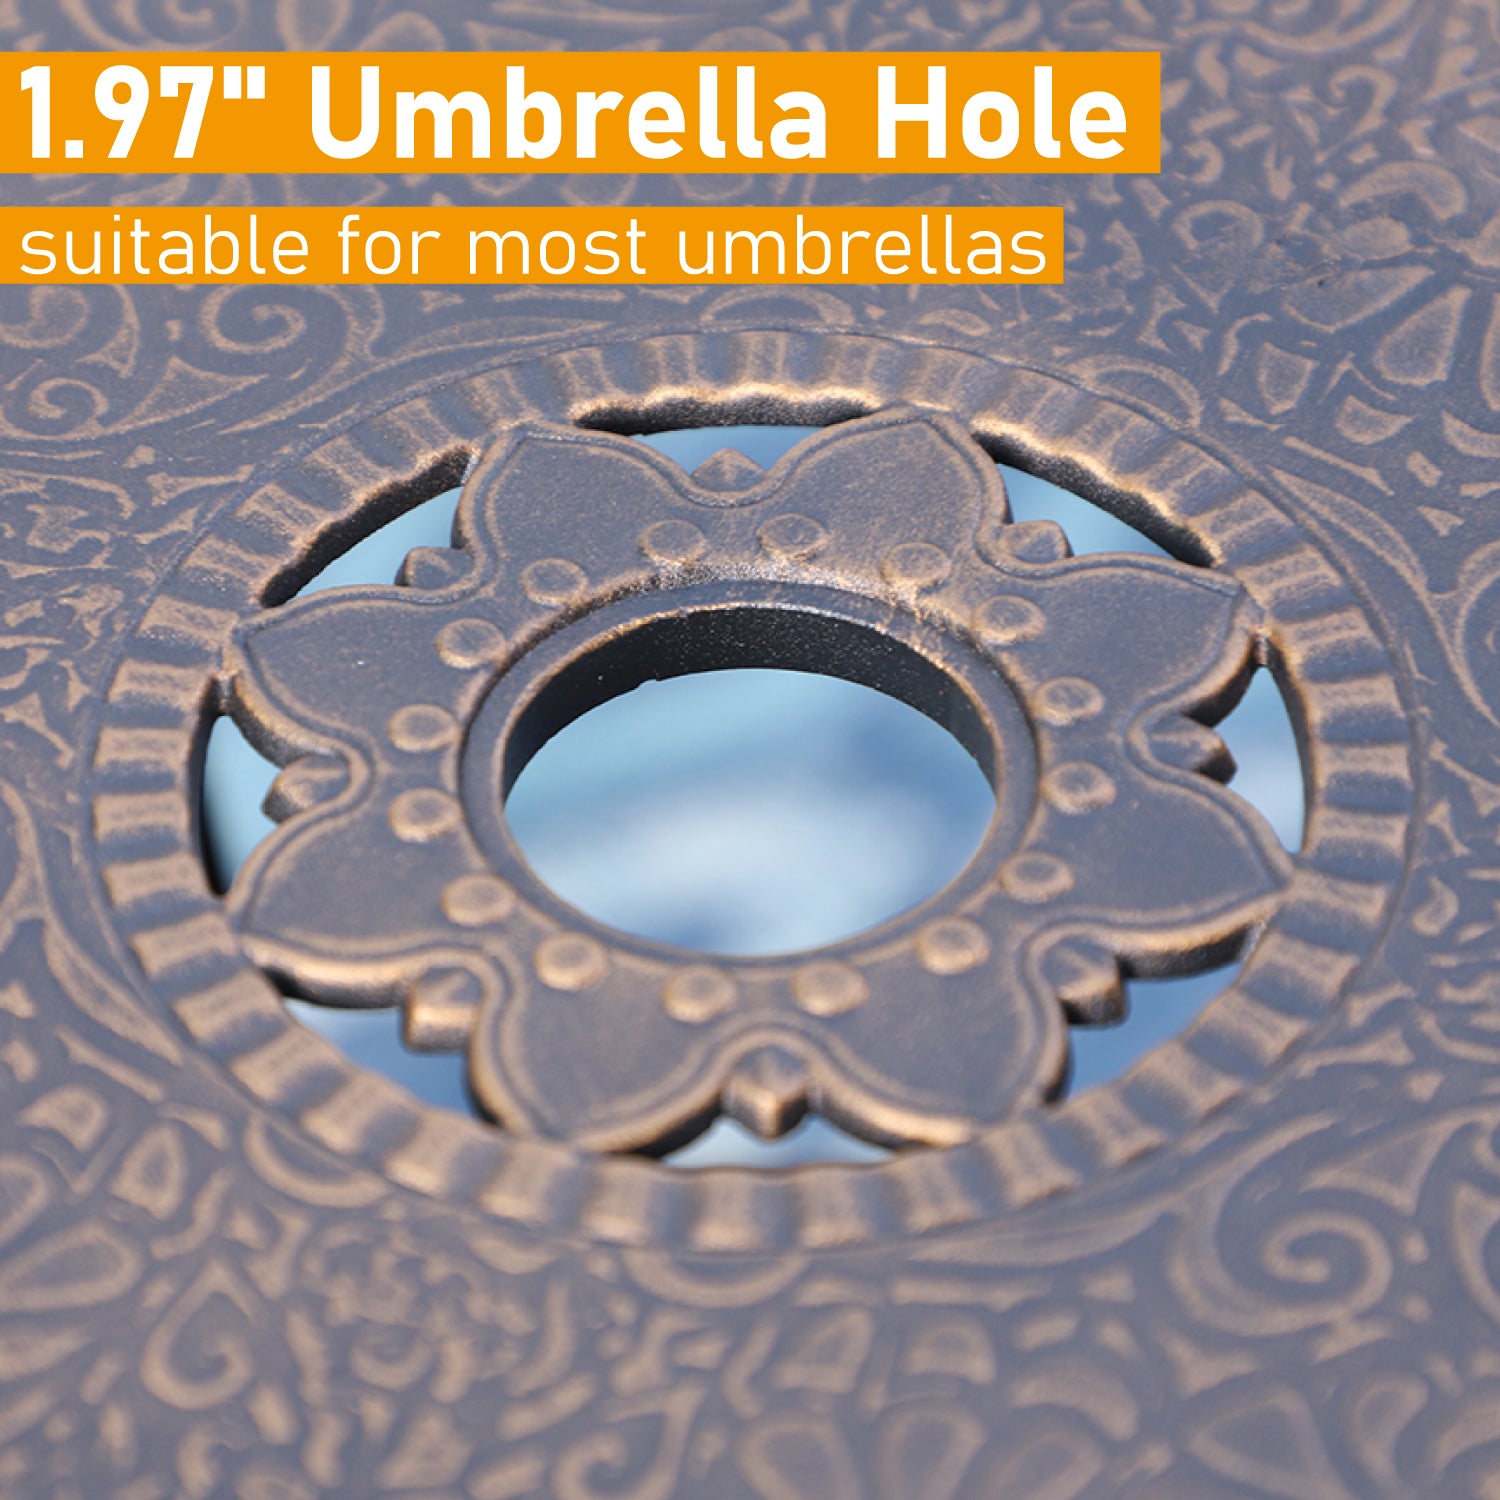 PHI VILLA 39" Cast Aluminum Golden Bronze Patio Dining Table with 1.97" Umbrella Hole